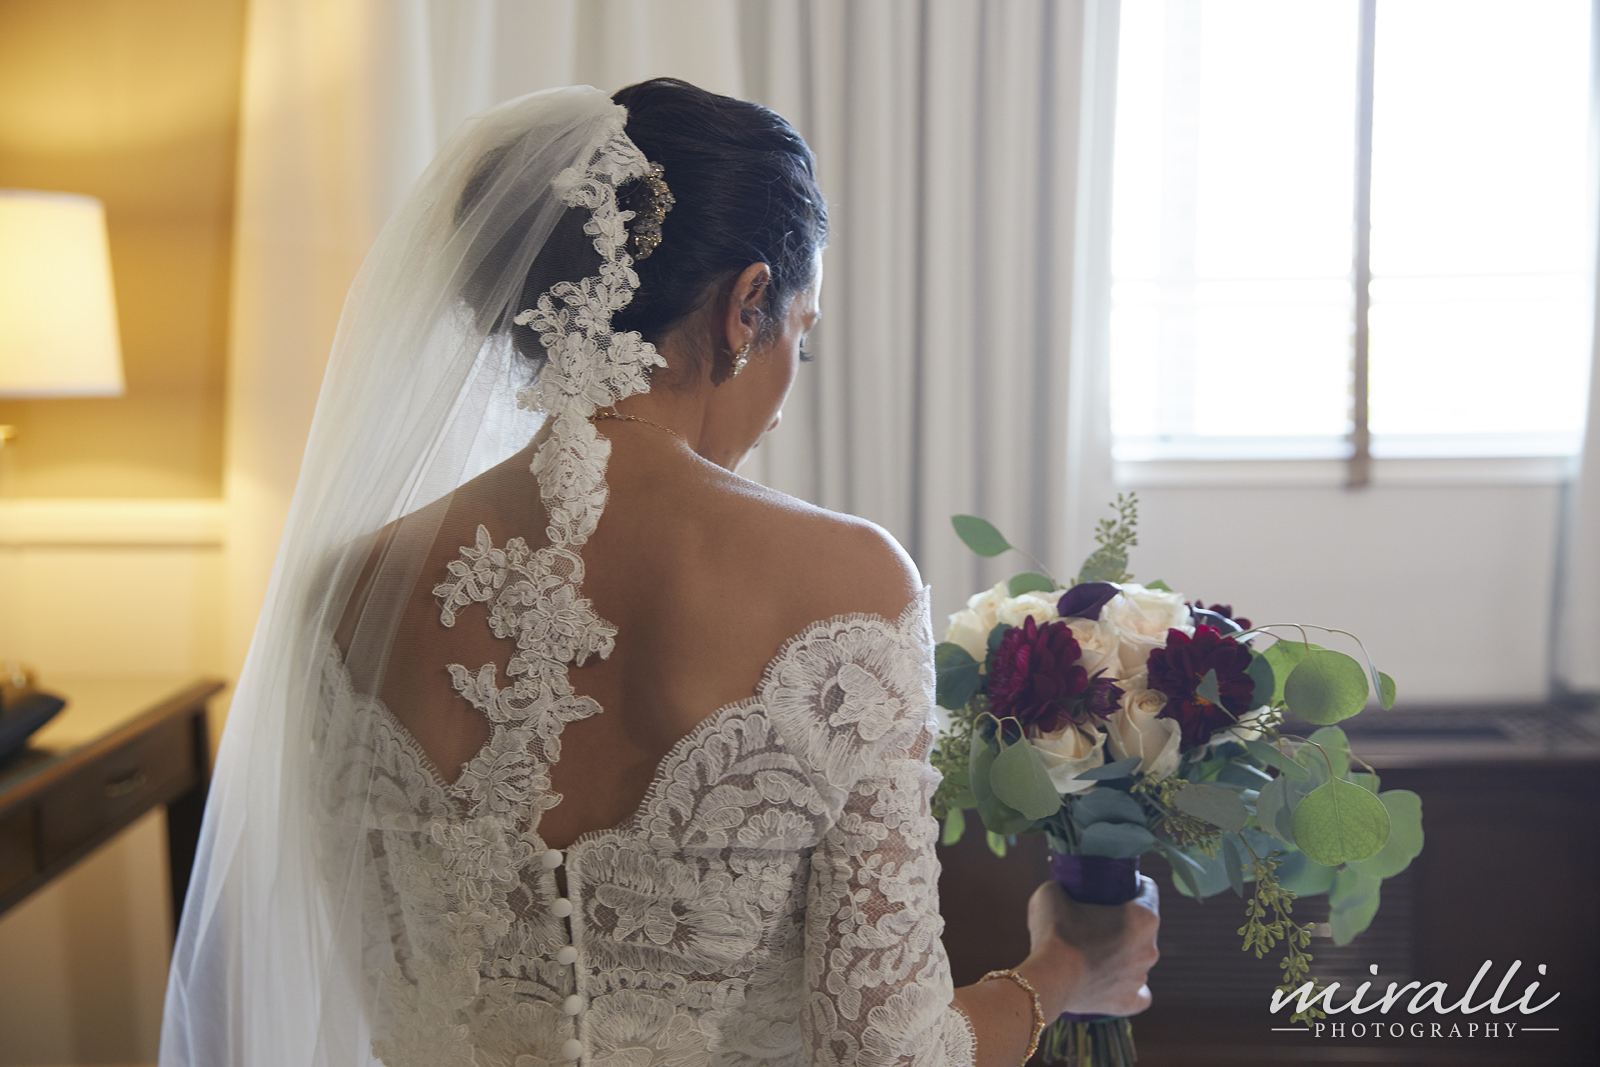 Leonards Palazzo Wedding Photos by Miralli Photography